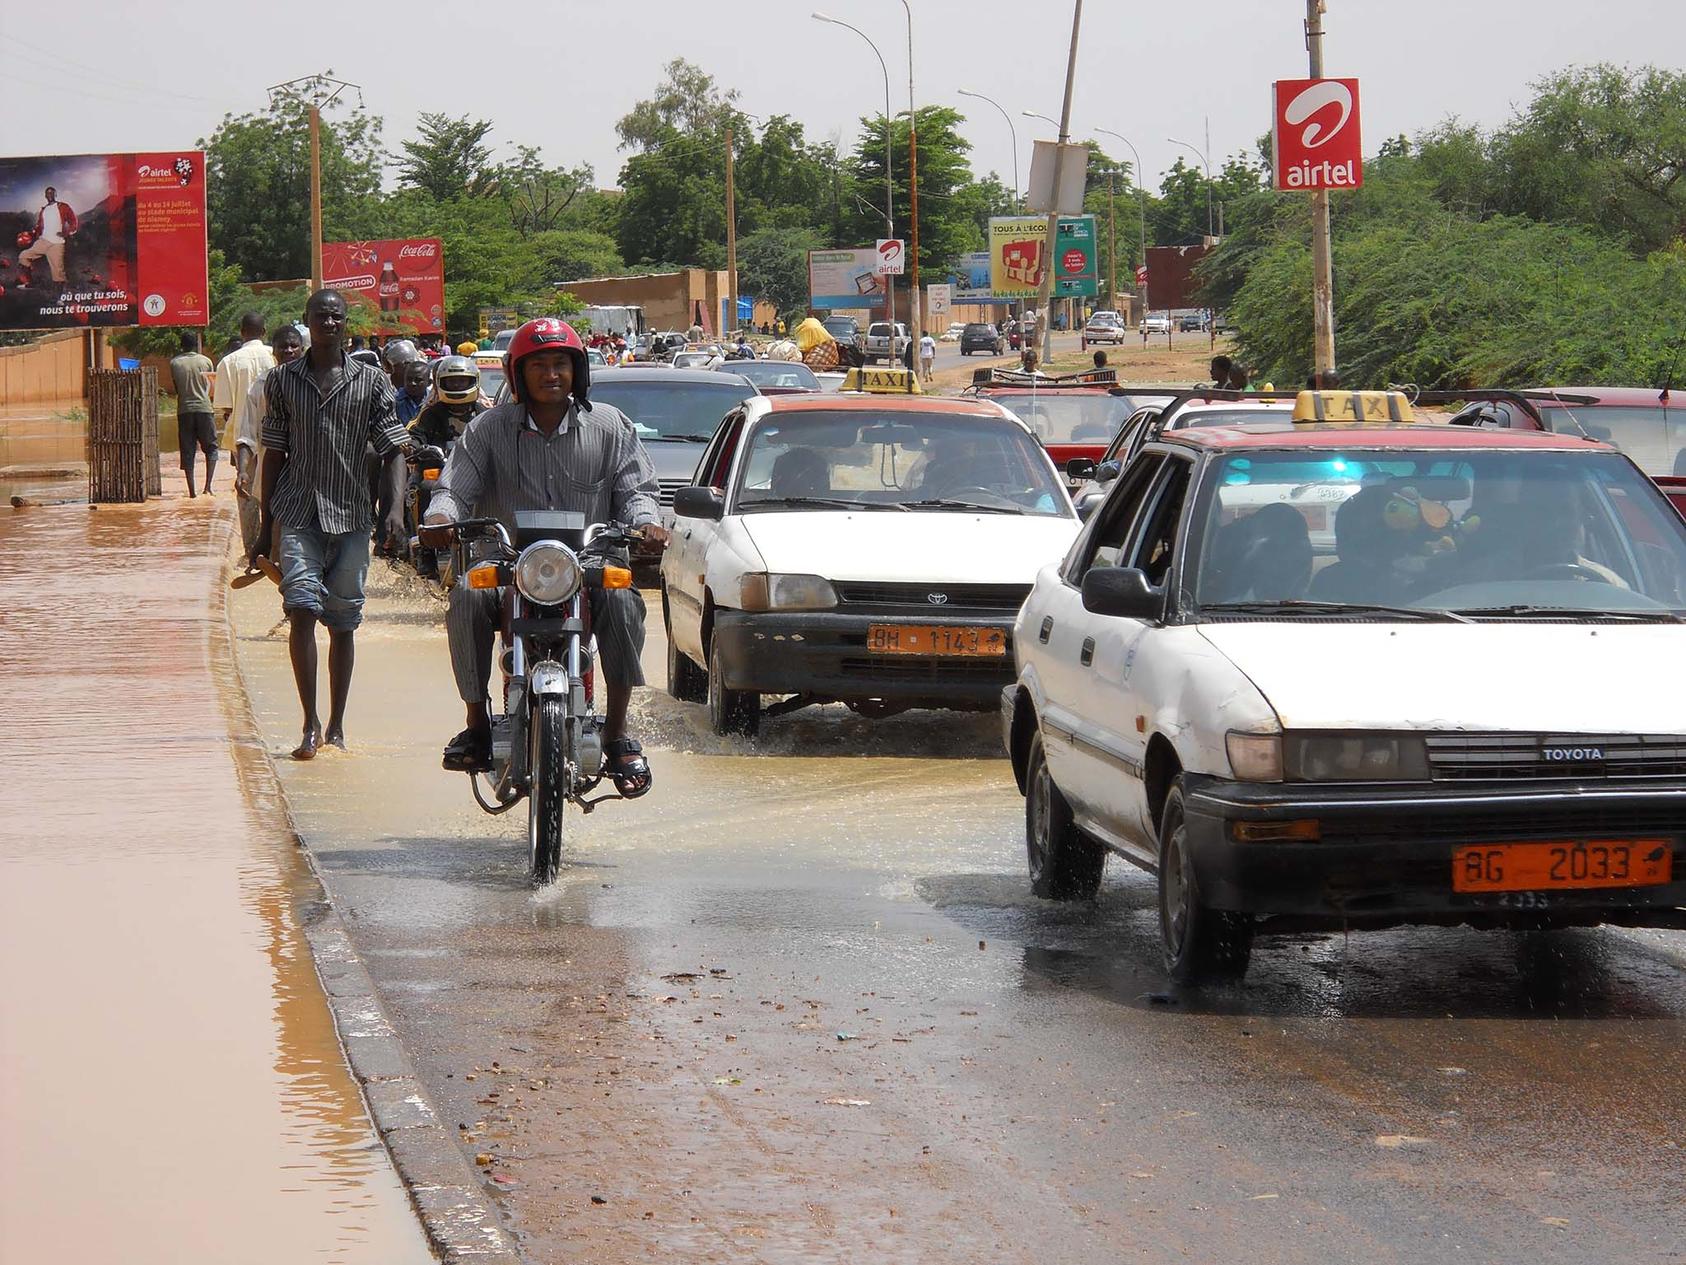 Nigeriens navigate a flooded road in their country’s capital city, Niamey, Nov. 30, 2013. (CC License 4.0/ Nomax12)